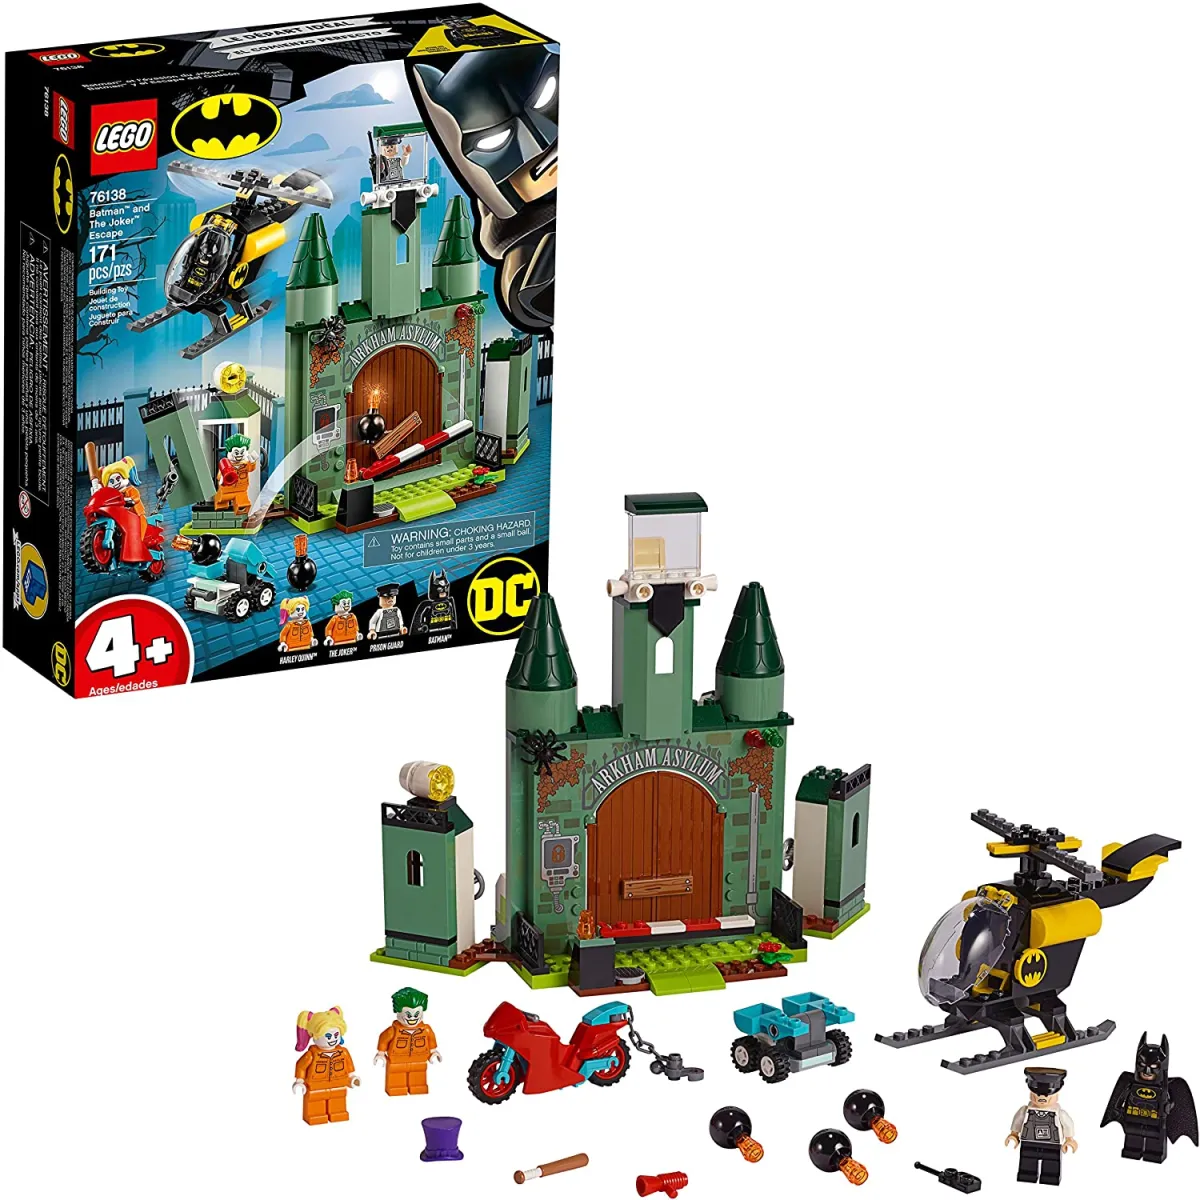 From Denmark】LEGO DC Batman: Batman and the Joker Escape 76138 Block Set  (171 pieces) guaranteed Authentic From Denmark 